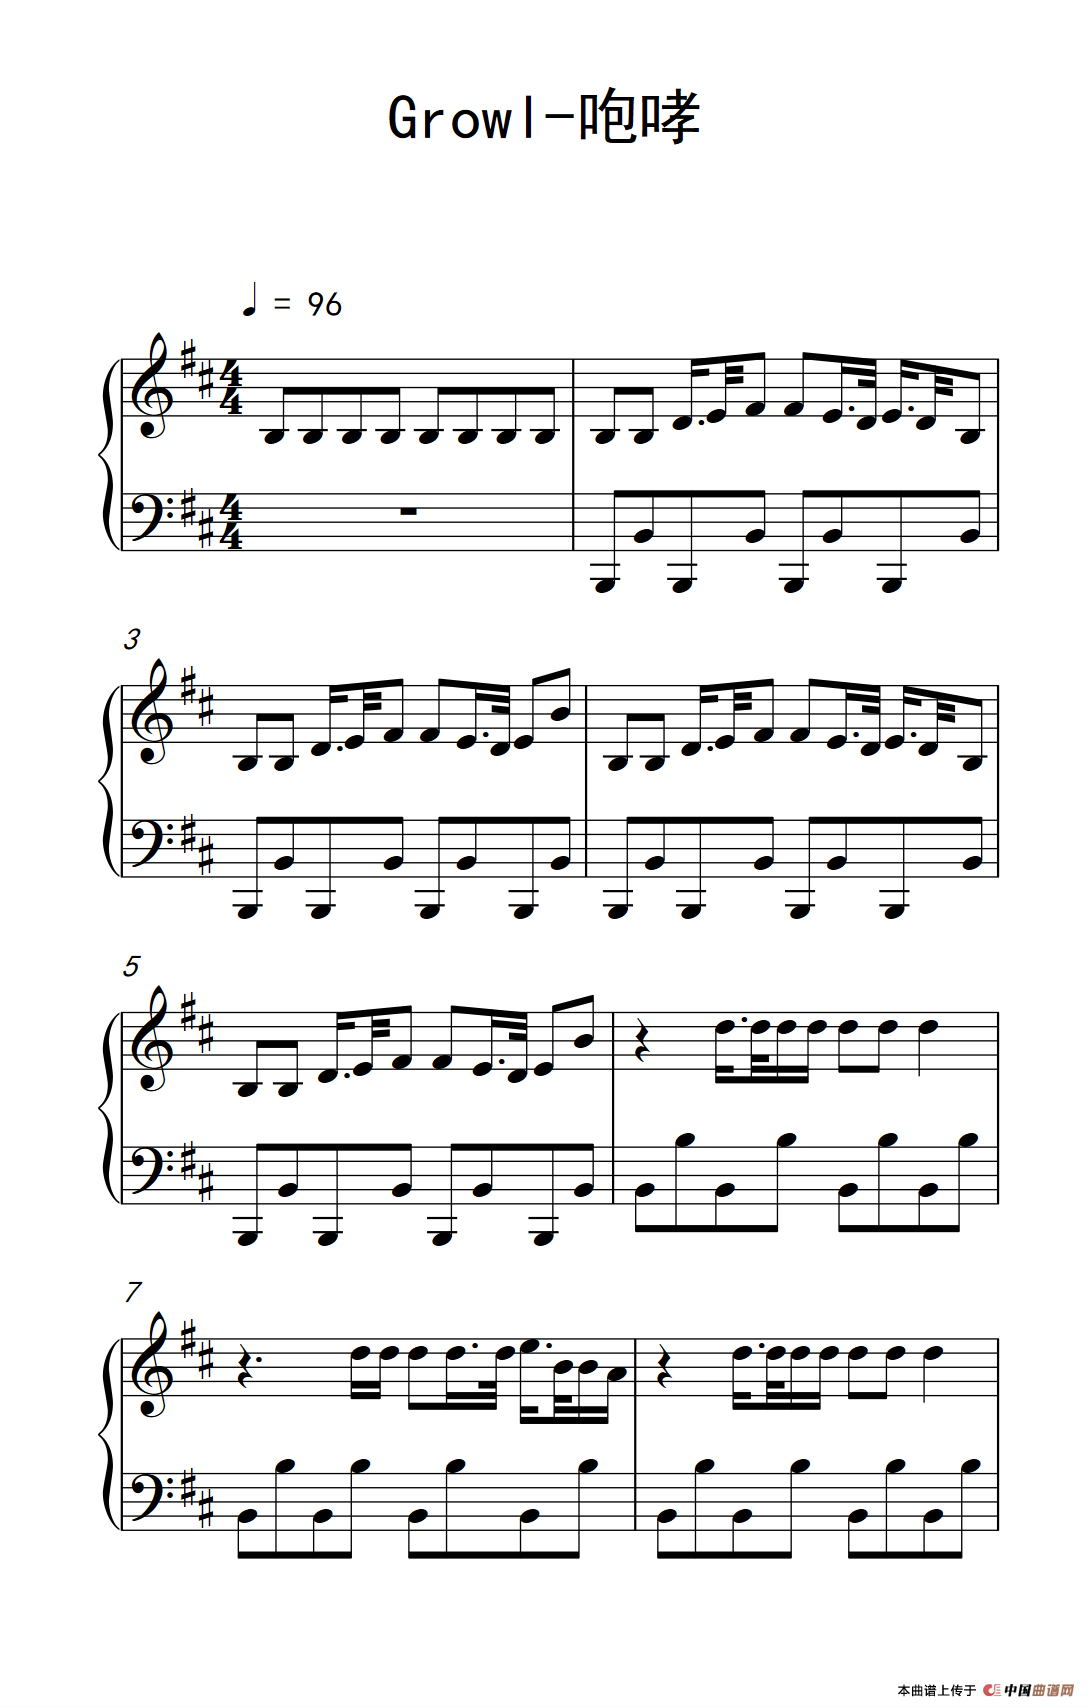 《Growl-咆哮》钢琴曲谱图分享